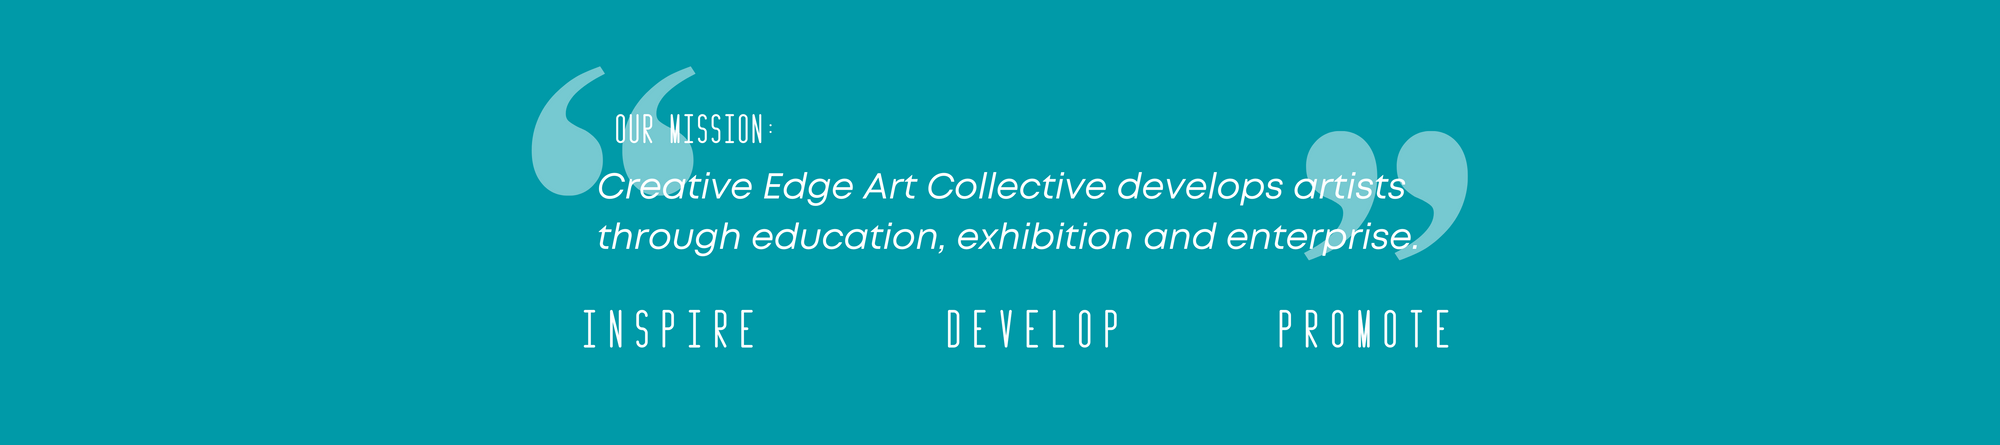 Creative Edge Art Collective Mission Statement